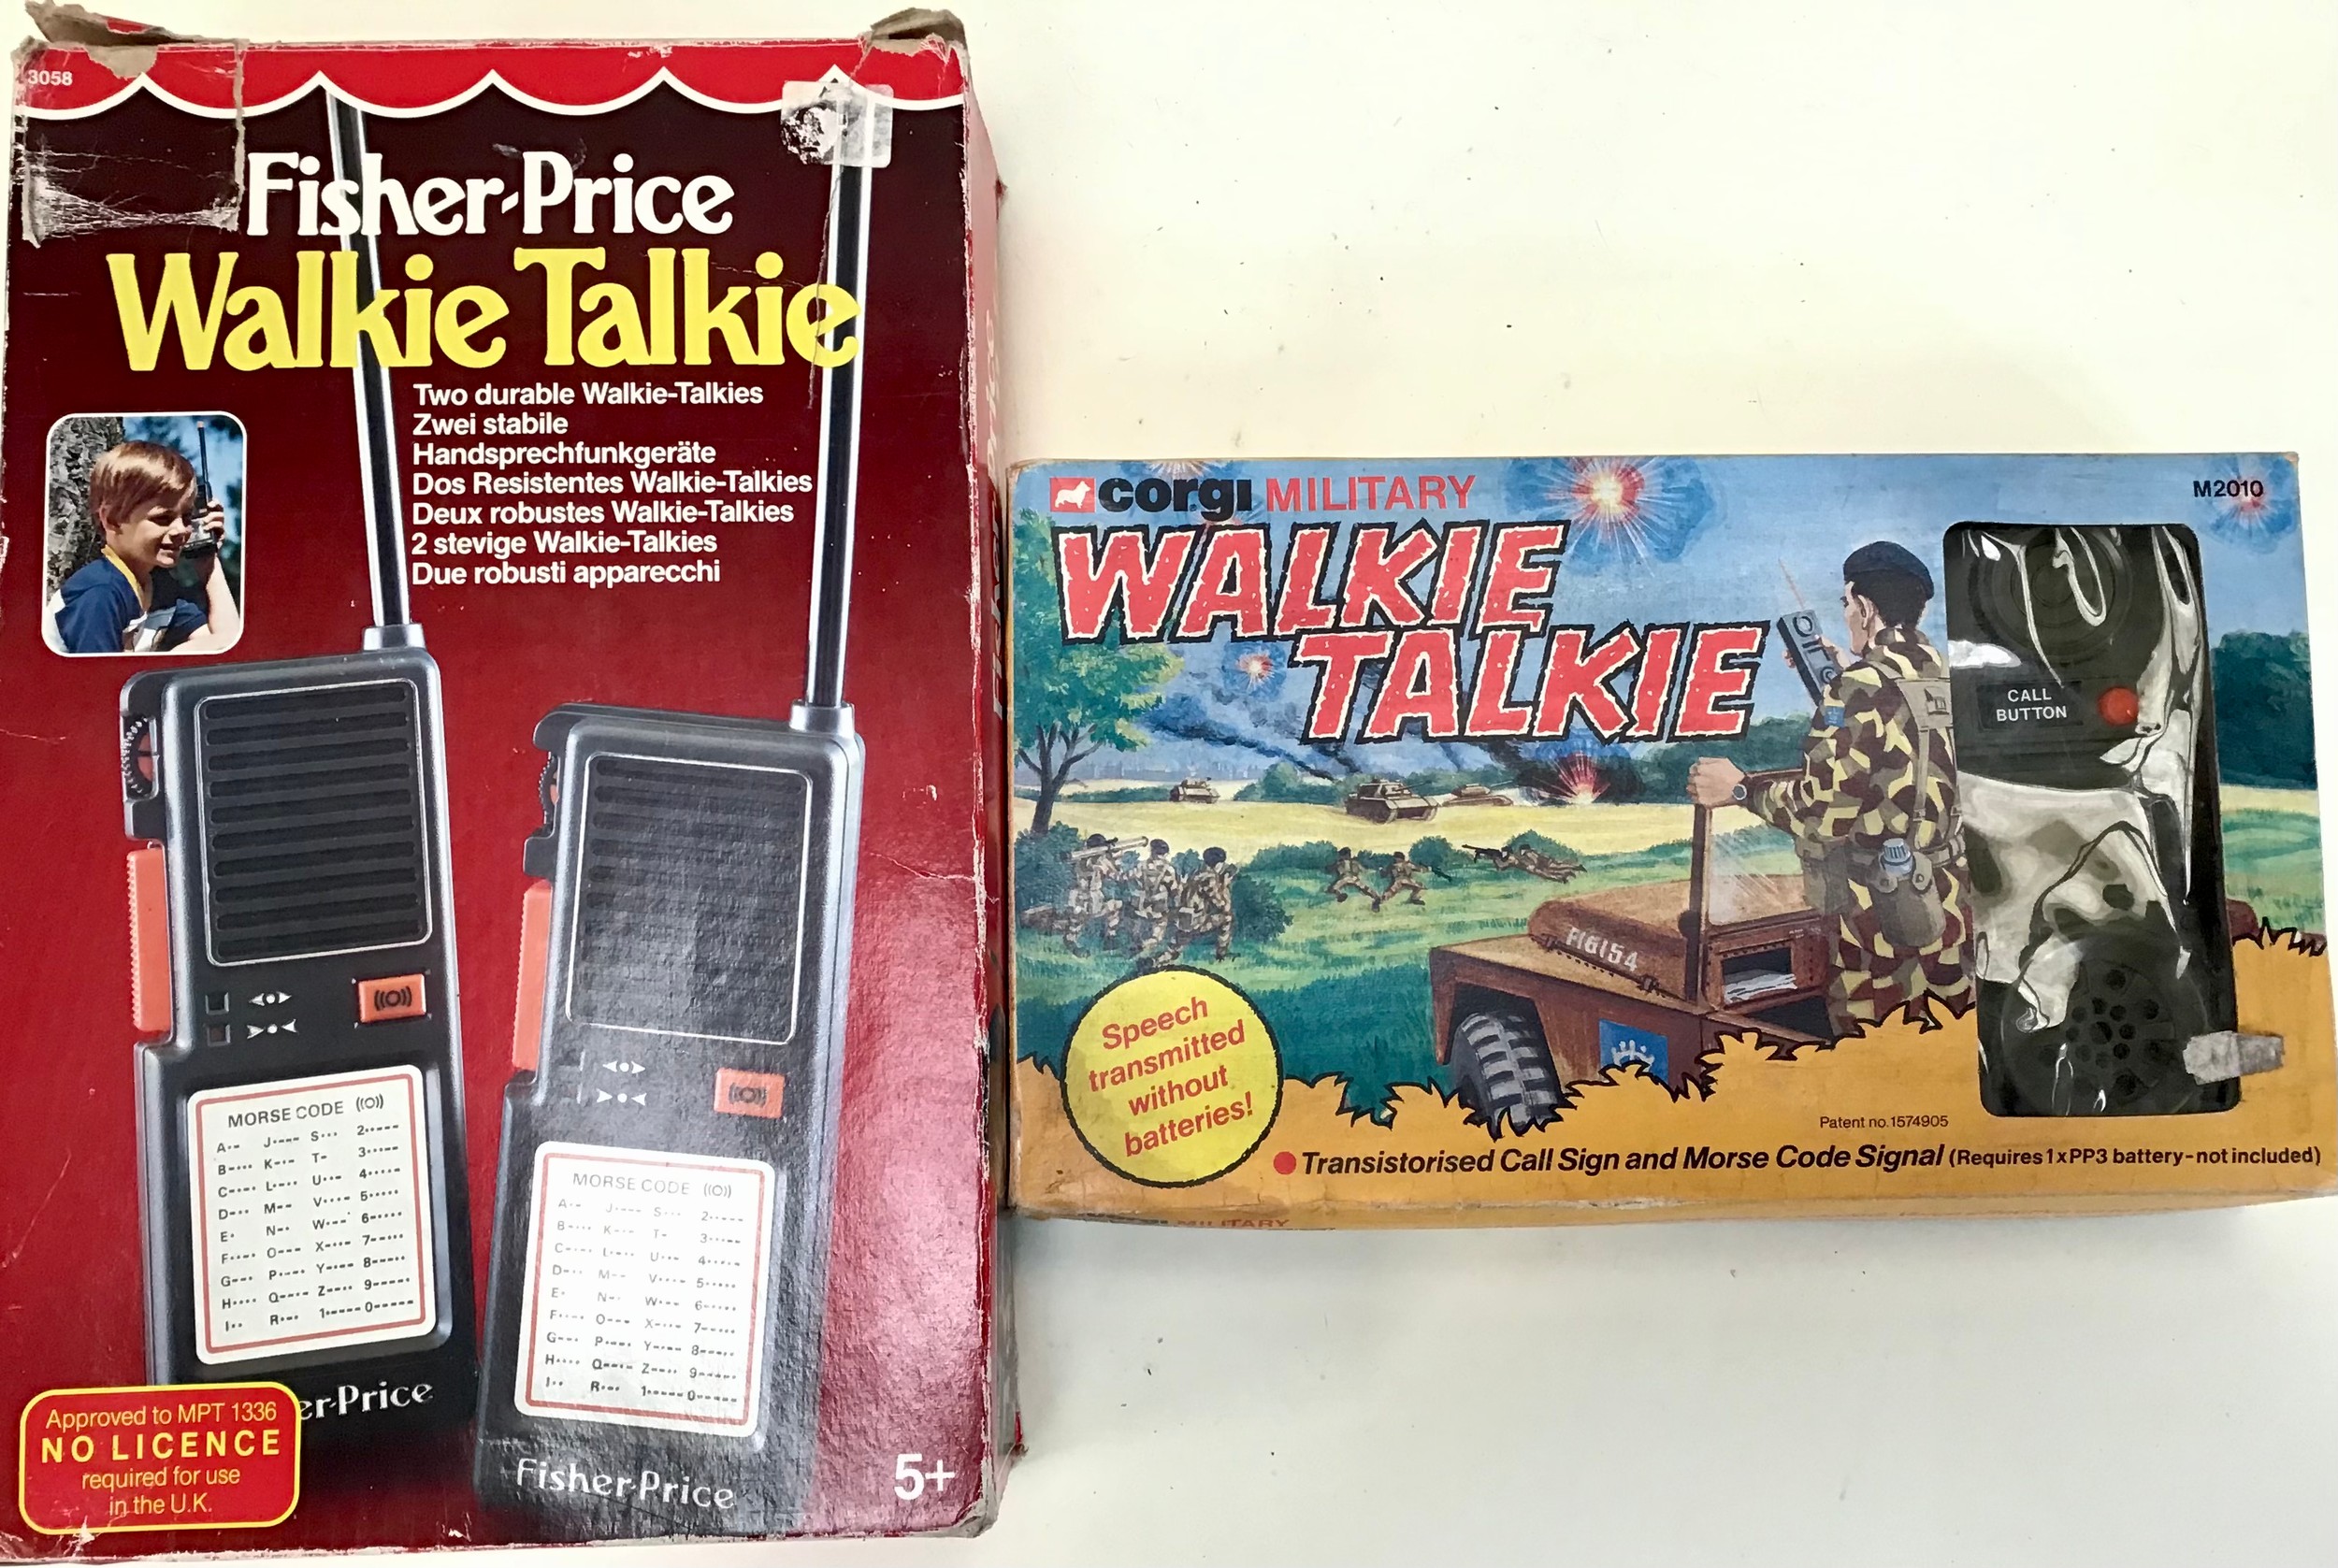 Vintage boxed Walkie Talkie sets. From 1983 we have a Fisher Price Sky Talkers Walkie Talkie